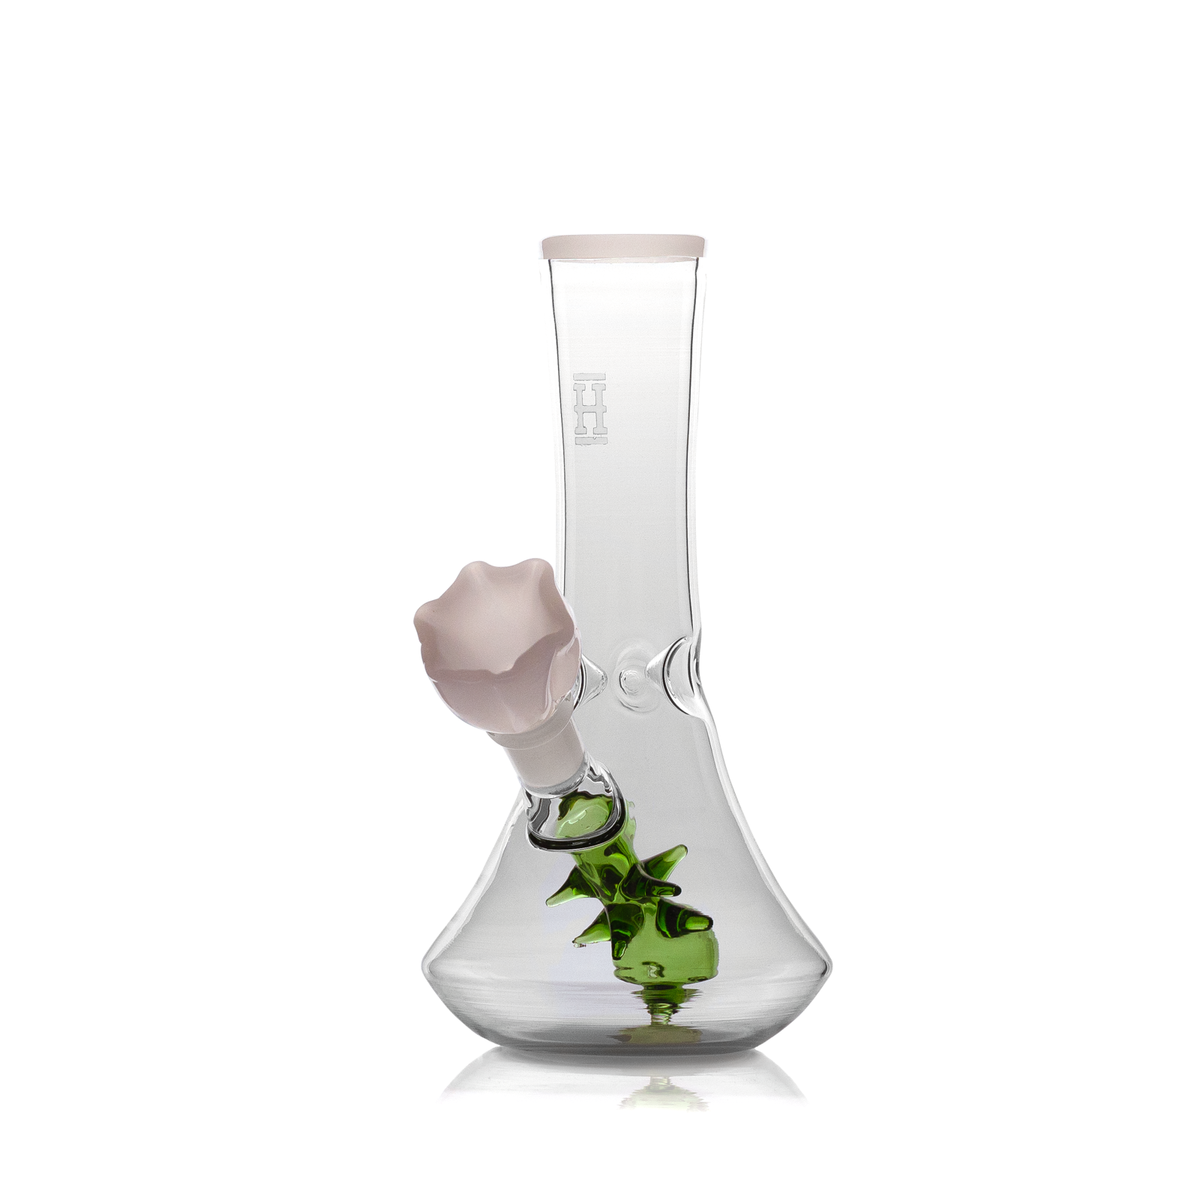 7” Flower Vase Bong - Rose Bowl includes HEMPER